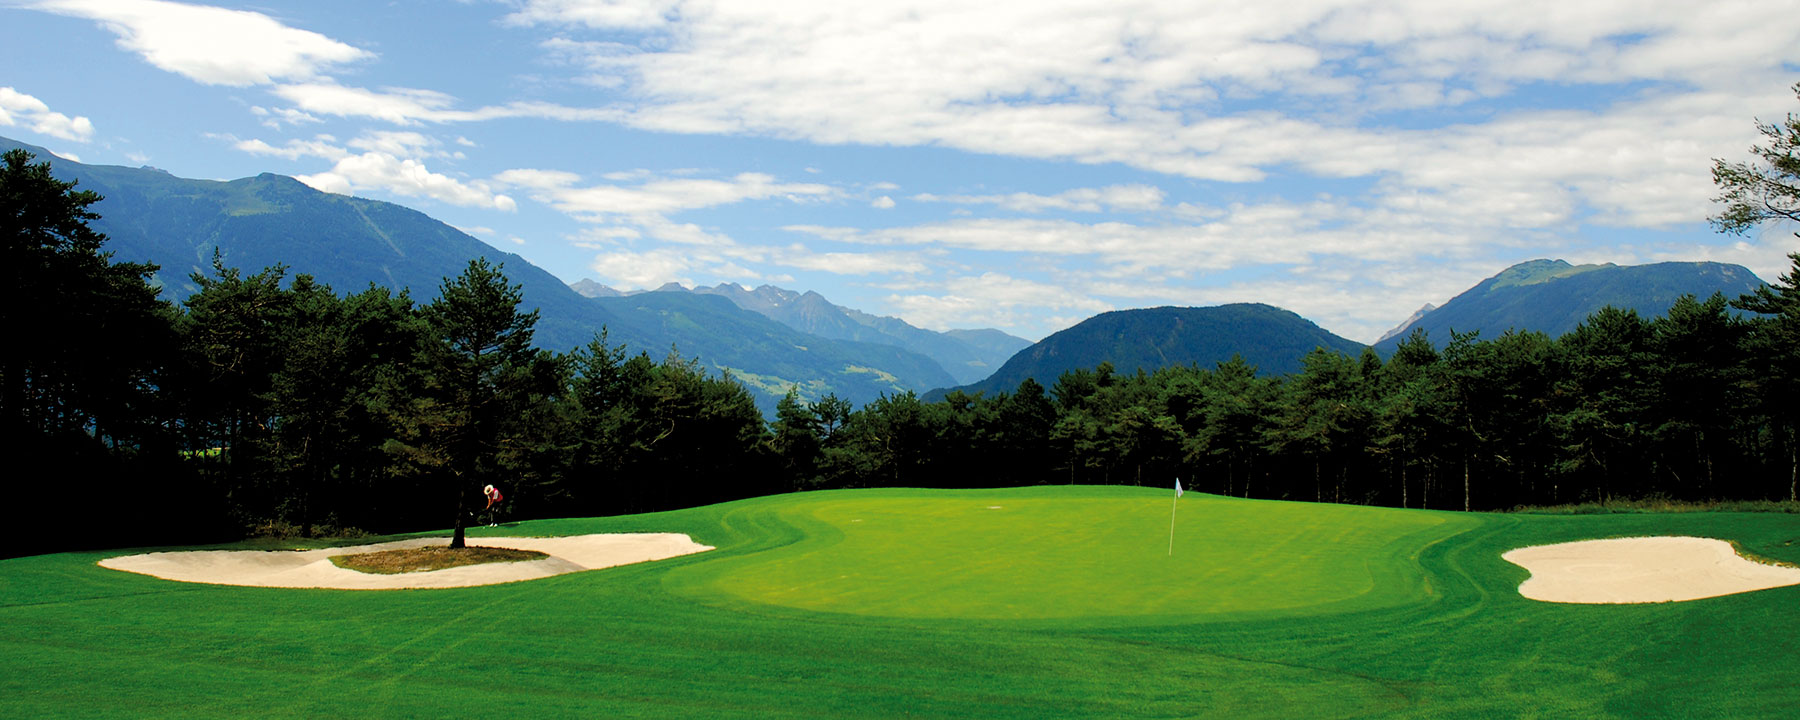 Golfregion Innsbruck – Mieming – Seefeld